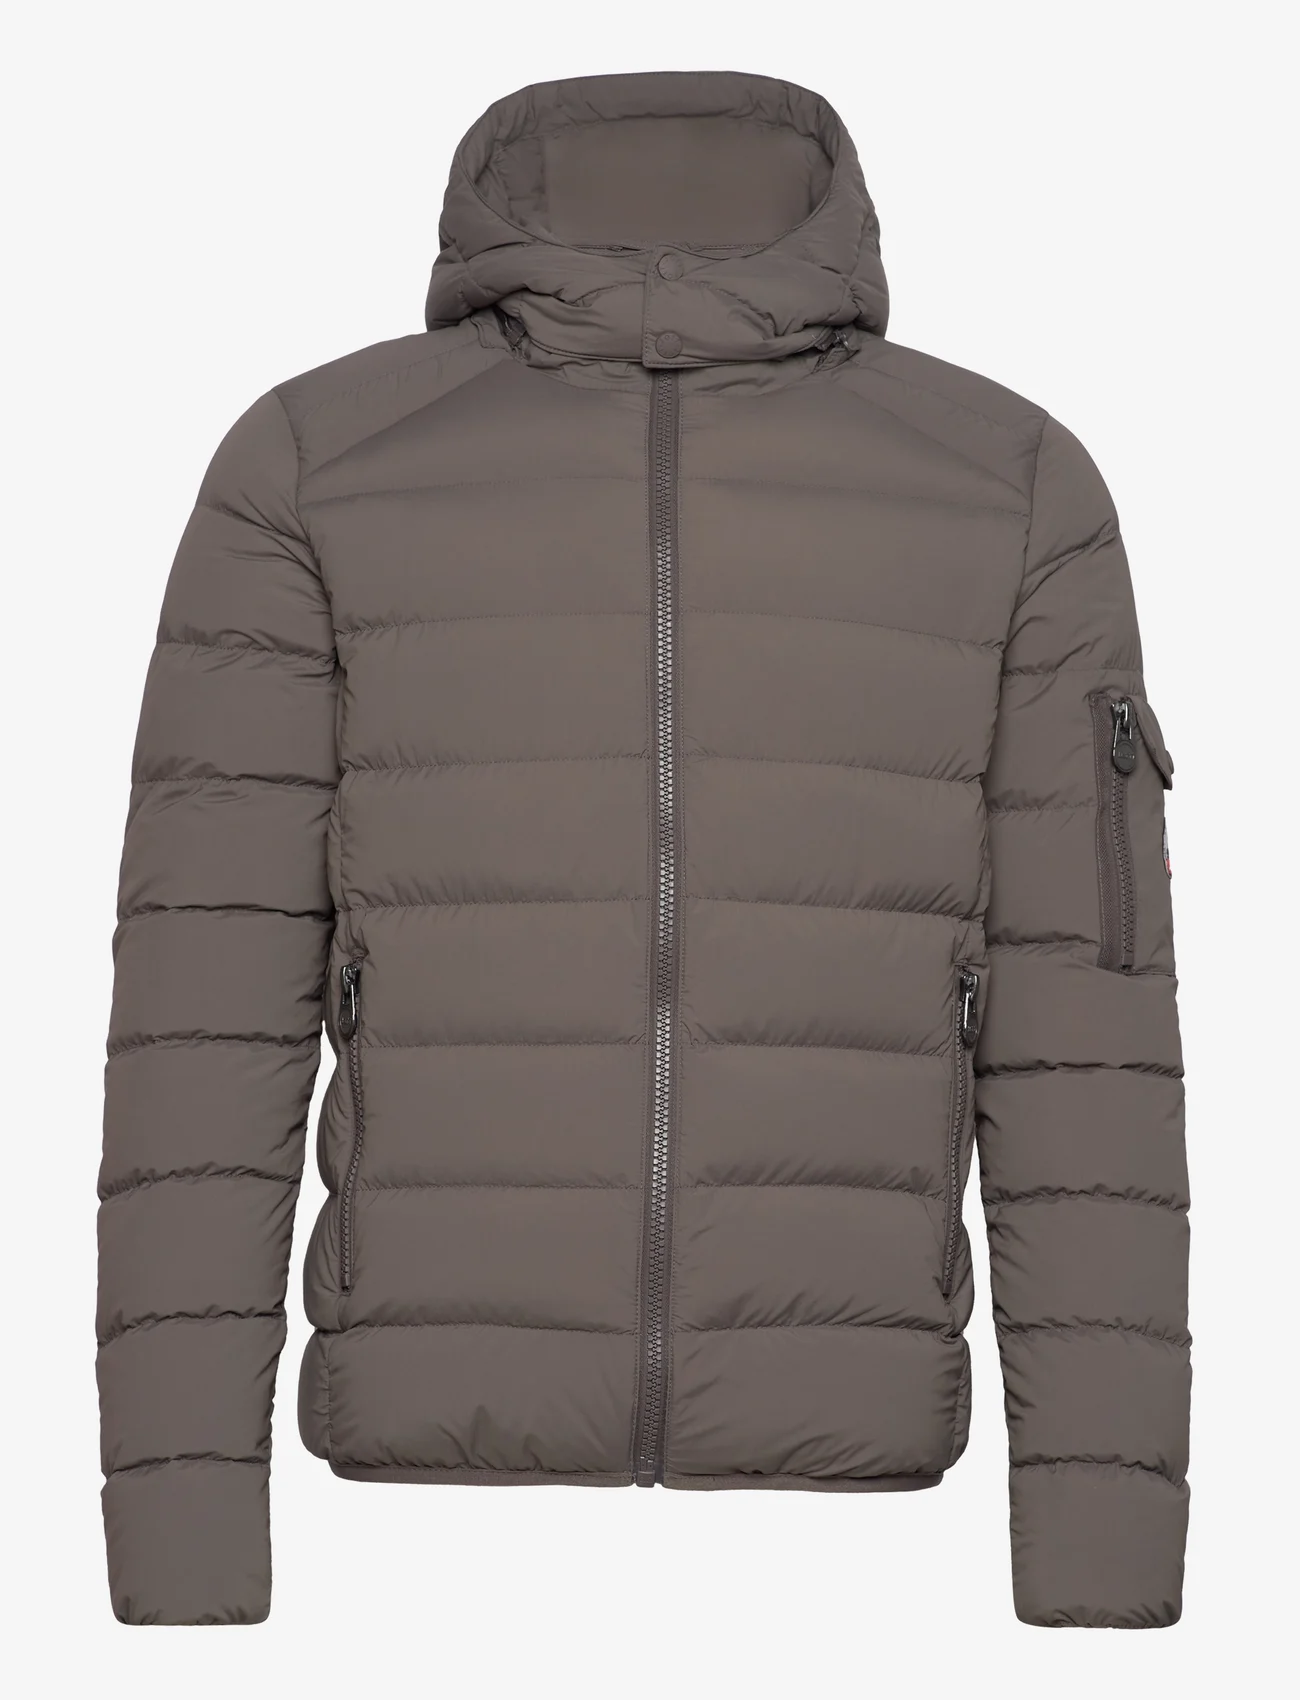 JOTT - ADRIEN - winter jackets - taupe - 0